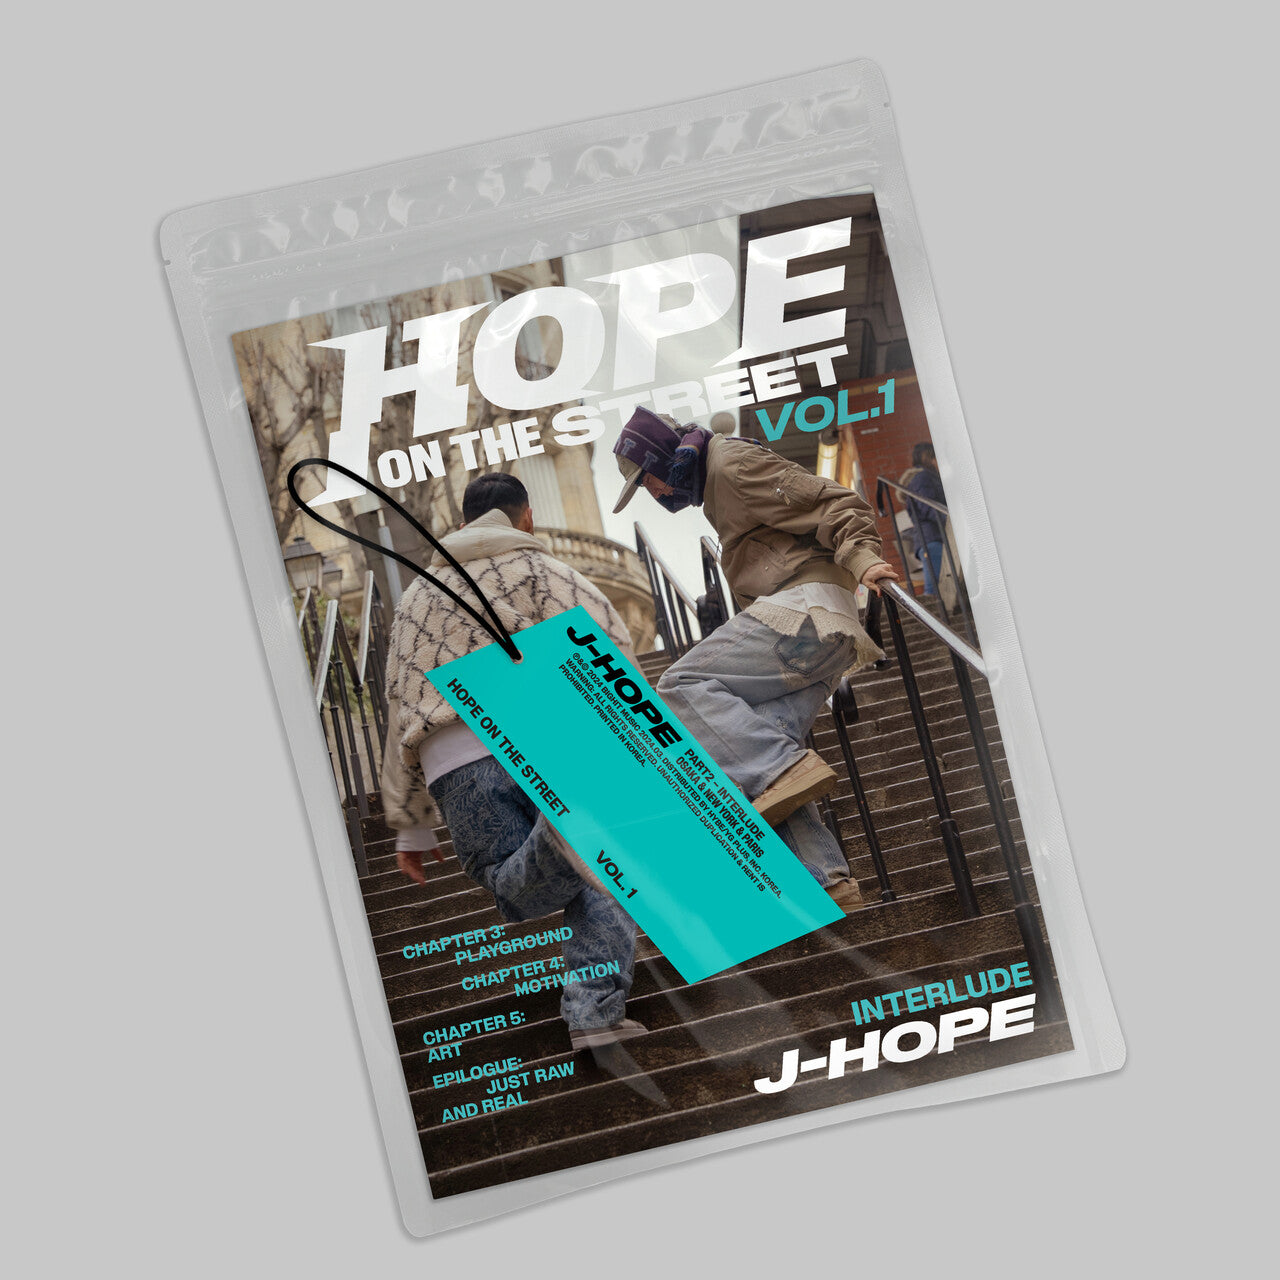 j-hope (BTS) - HOPE ON THE STREET VOL.1 CD (VER.2 INTERLUDE)